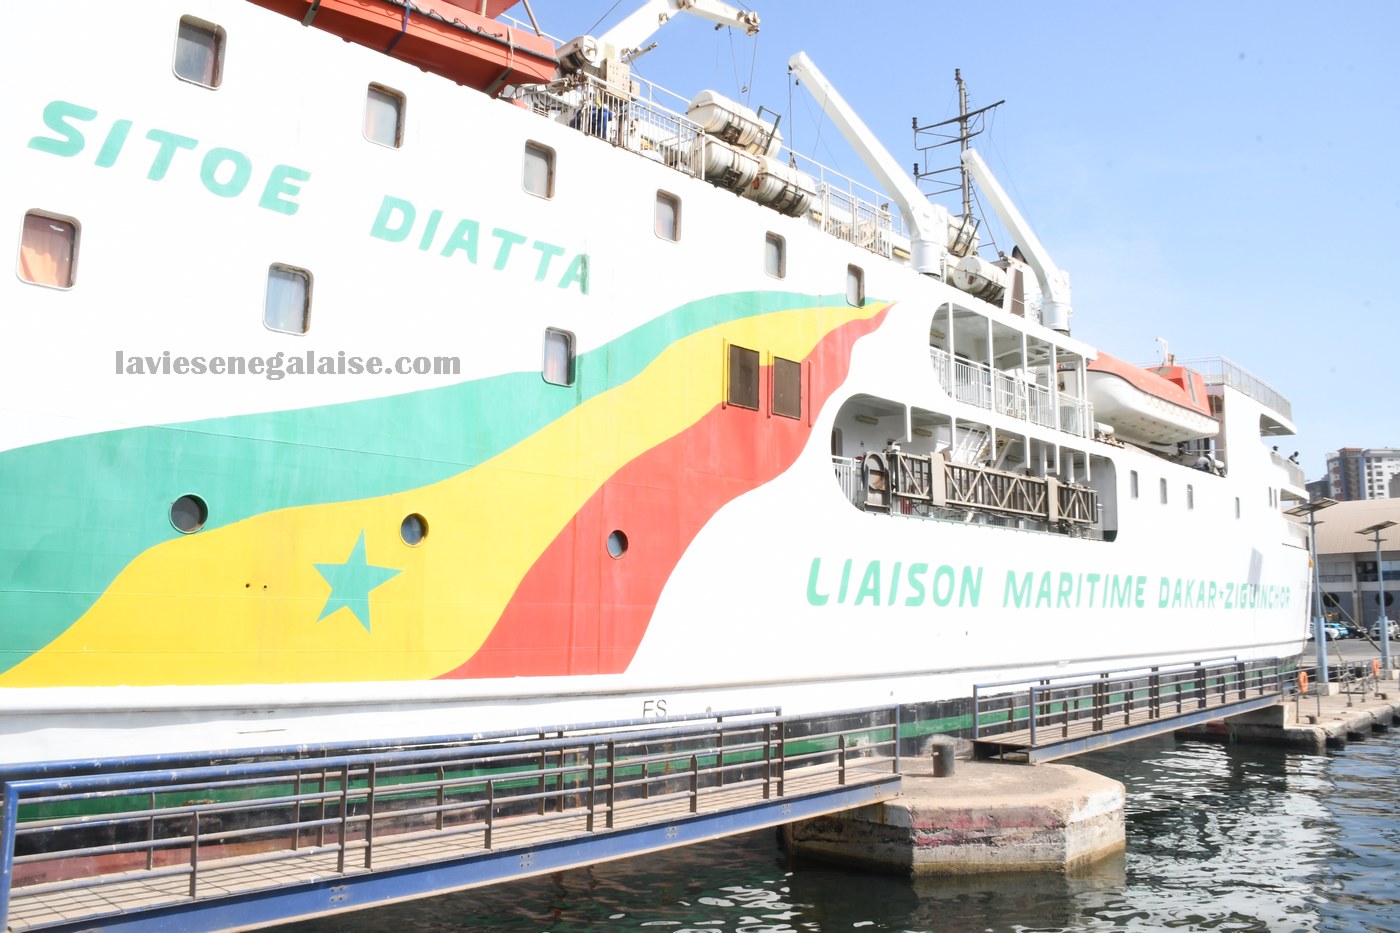 Navire Aline Sitoé Diatta Ziguinchor, rotations maritimes Ziguinchor-Dakar